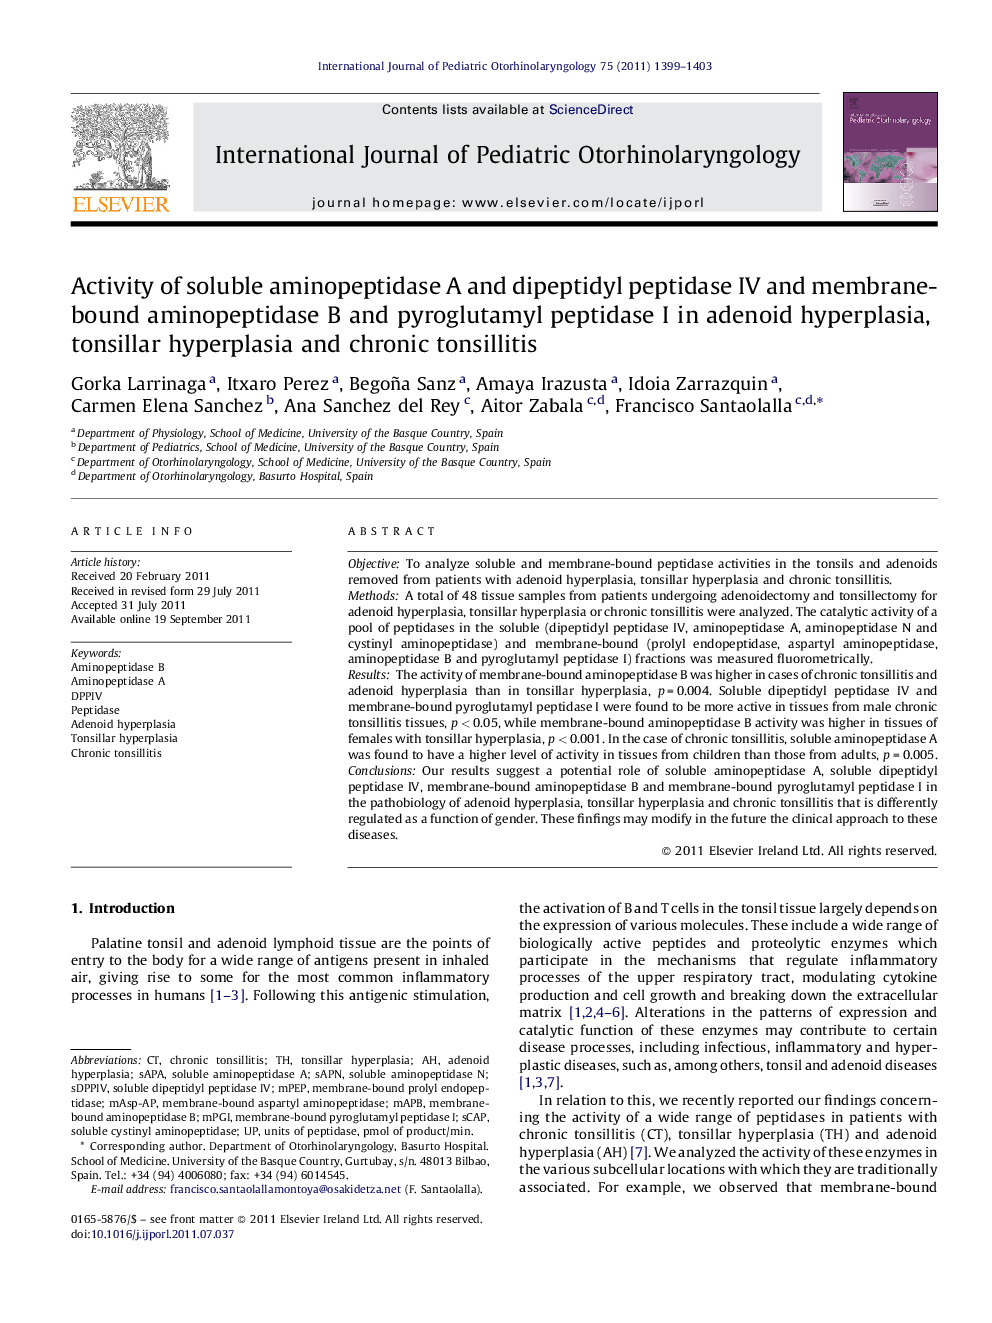 Activity of soluble aminopeptidase A and dipeptidyl peptidase IV and membrane-bound aminopeptidase B and pyroglutamyl peptidase I in adenoid hyperplasia, tonsillar hyperplasia and chronic tonsillitis